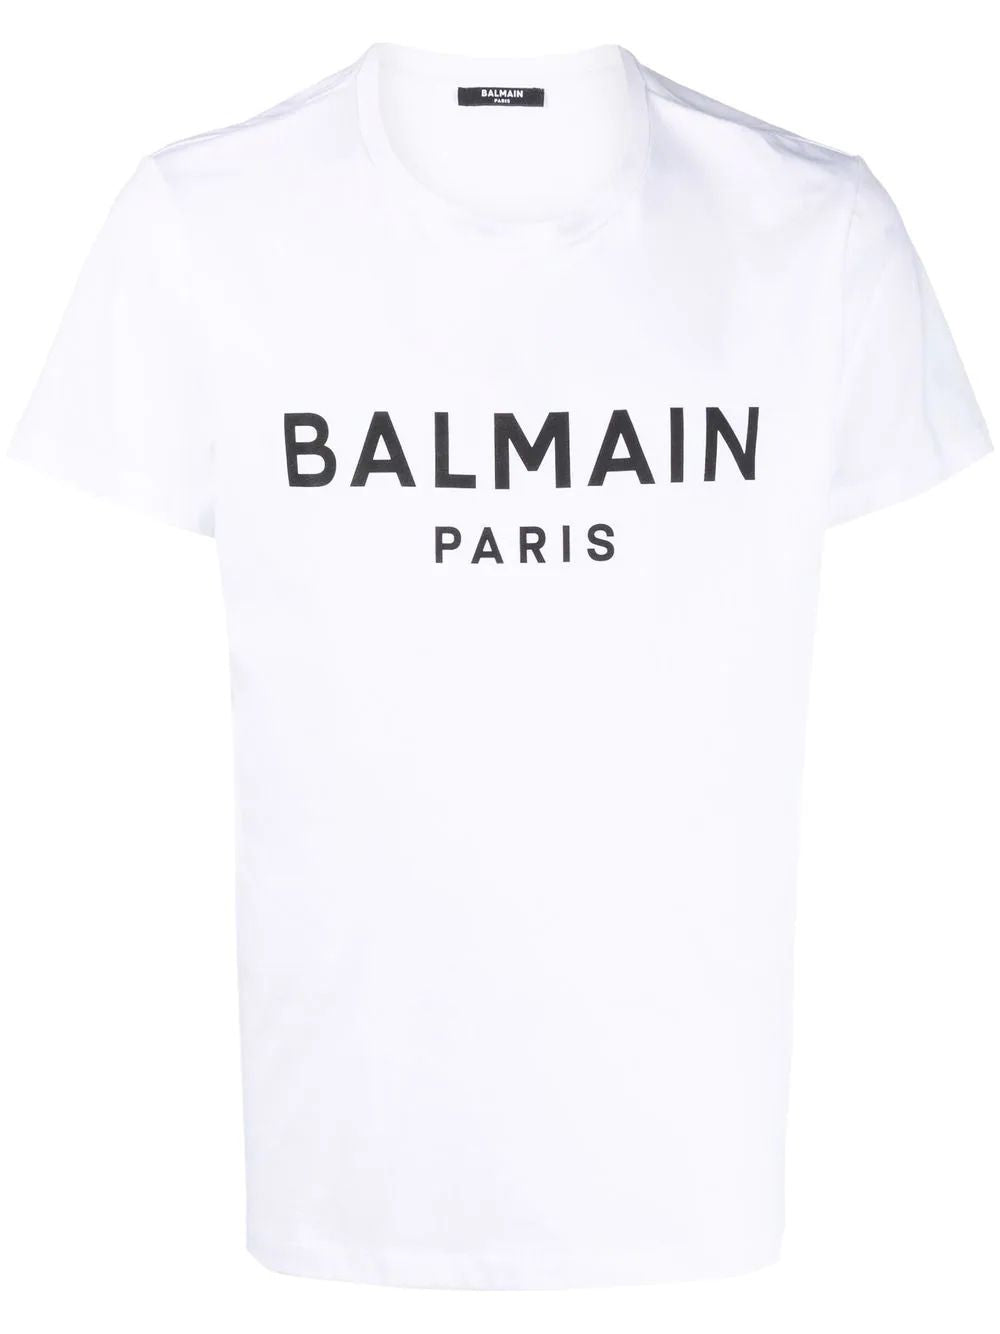 GAB BALMAIN Balmain Paris T -shirt